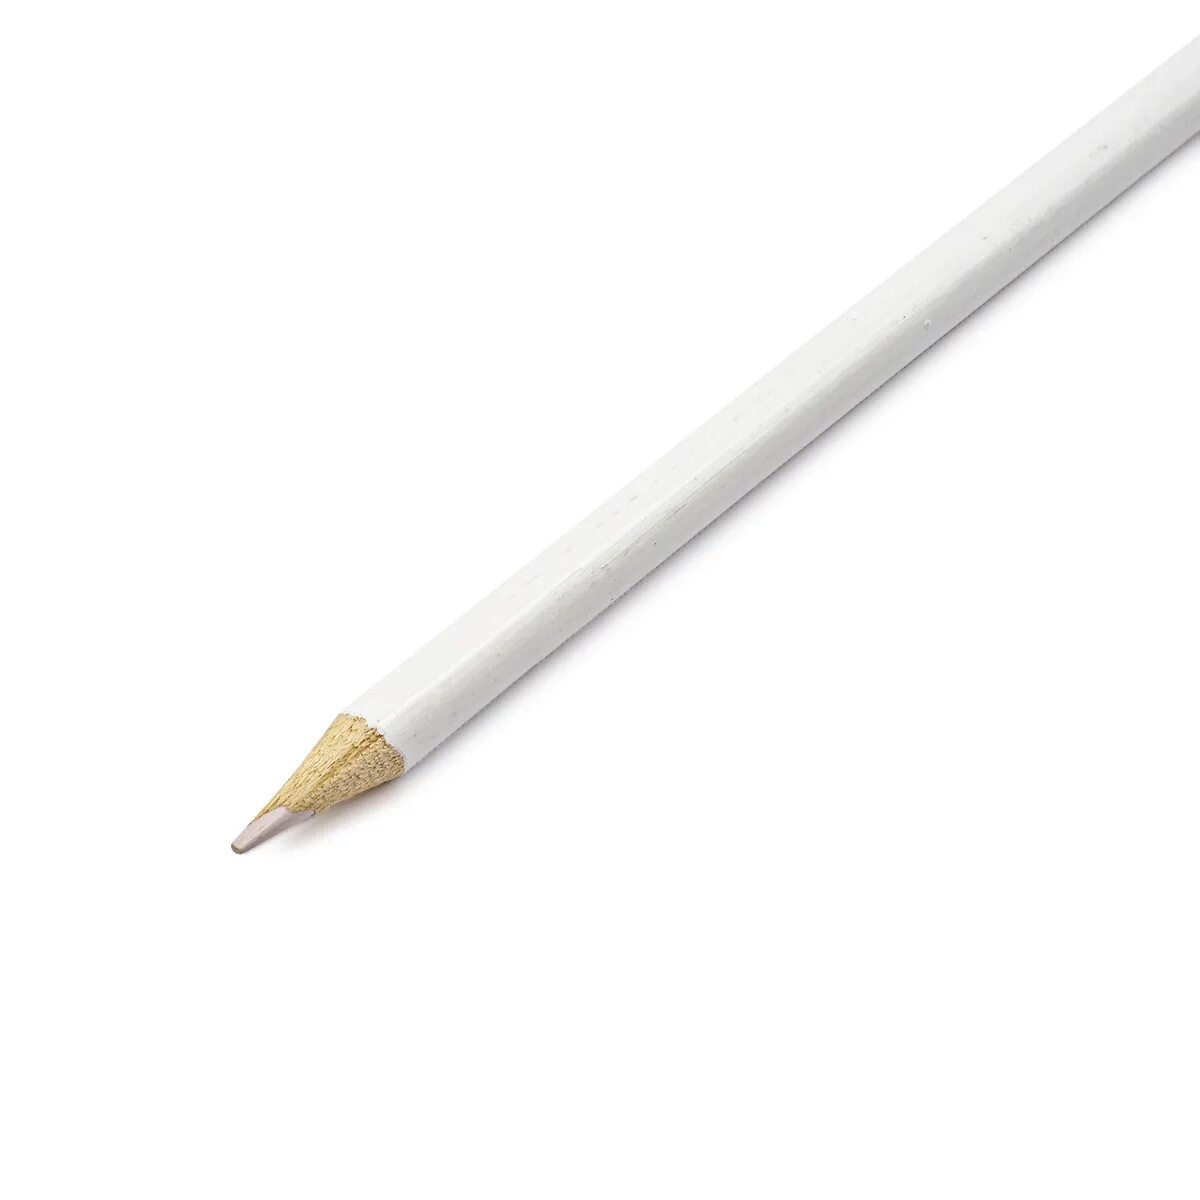 Белый карандаш купить. 410101 Карандаш маркировочный смывающийся БС. Белый карандаш. Карандаш белого цвета. Карандаш с белым грифелем.